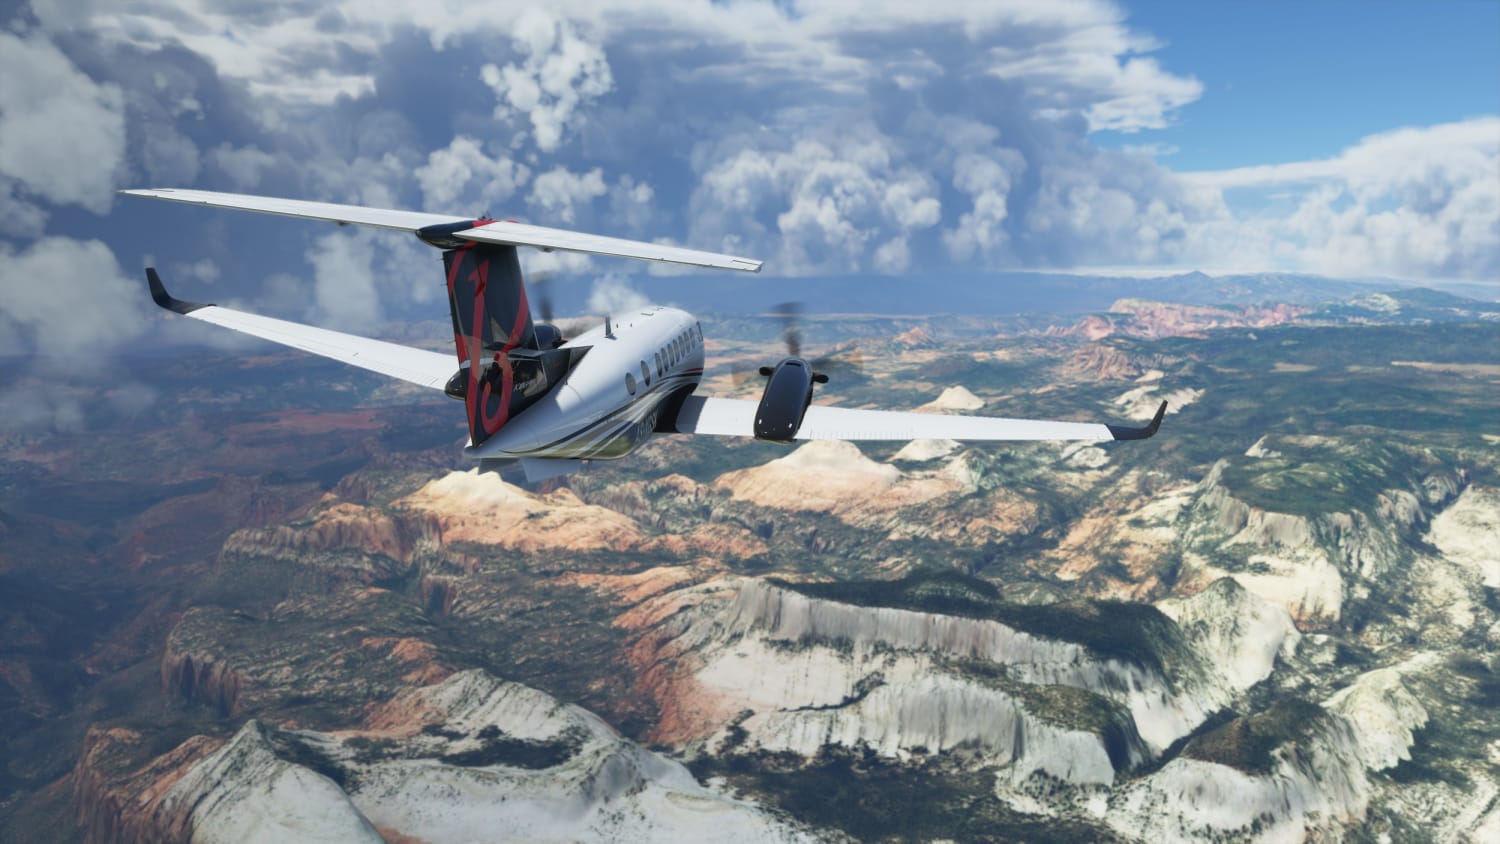 Microsoft Flight Simulator: Anniversary Edition brings new planes and more